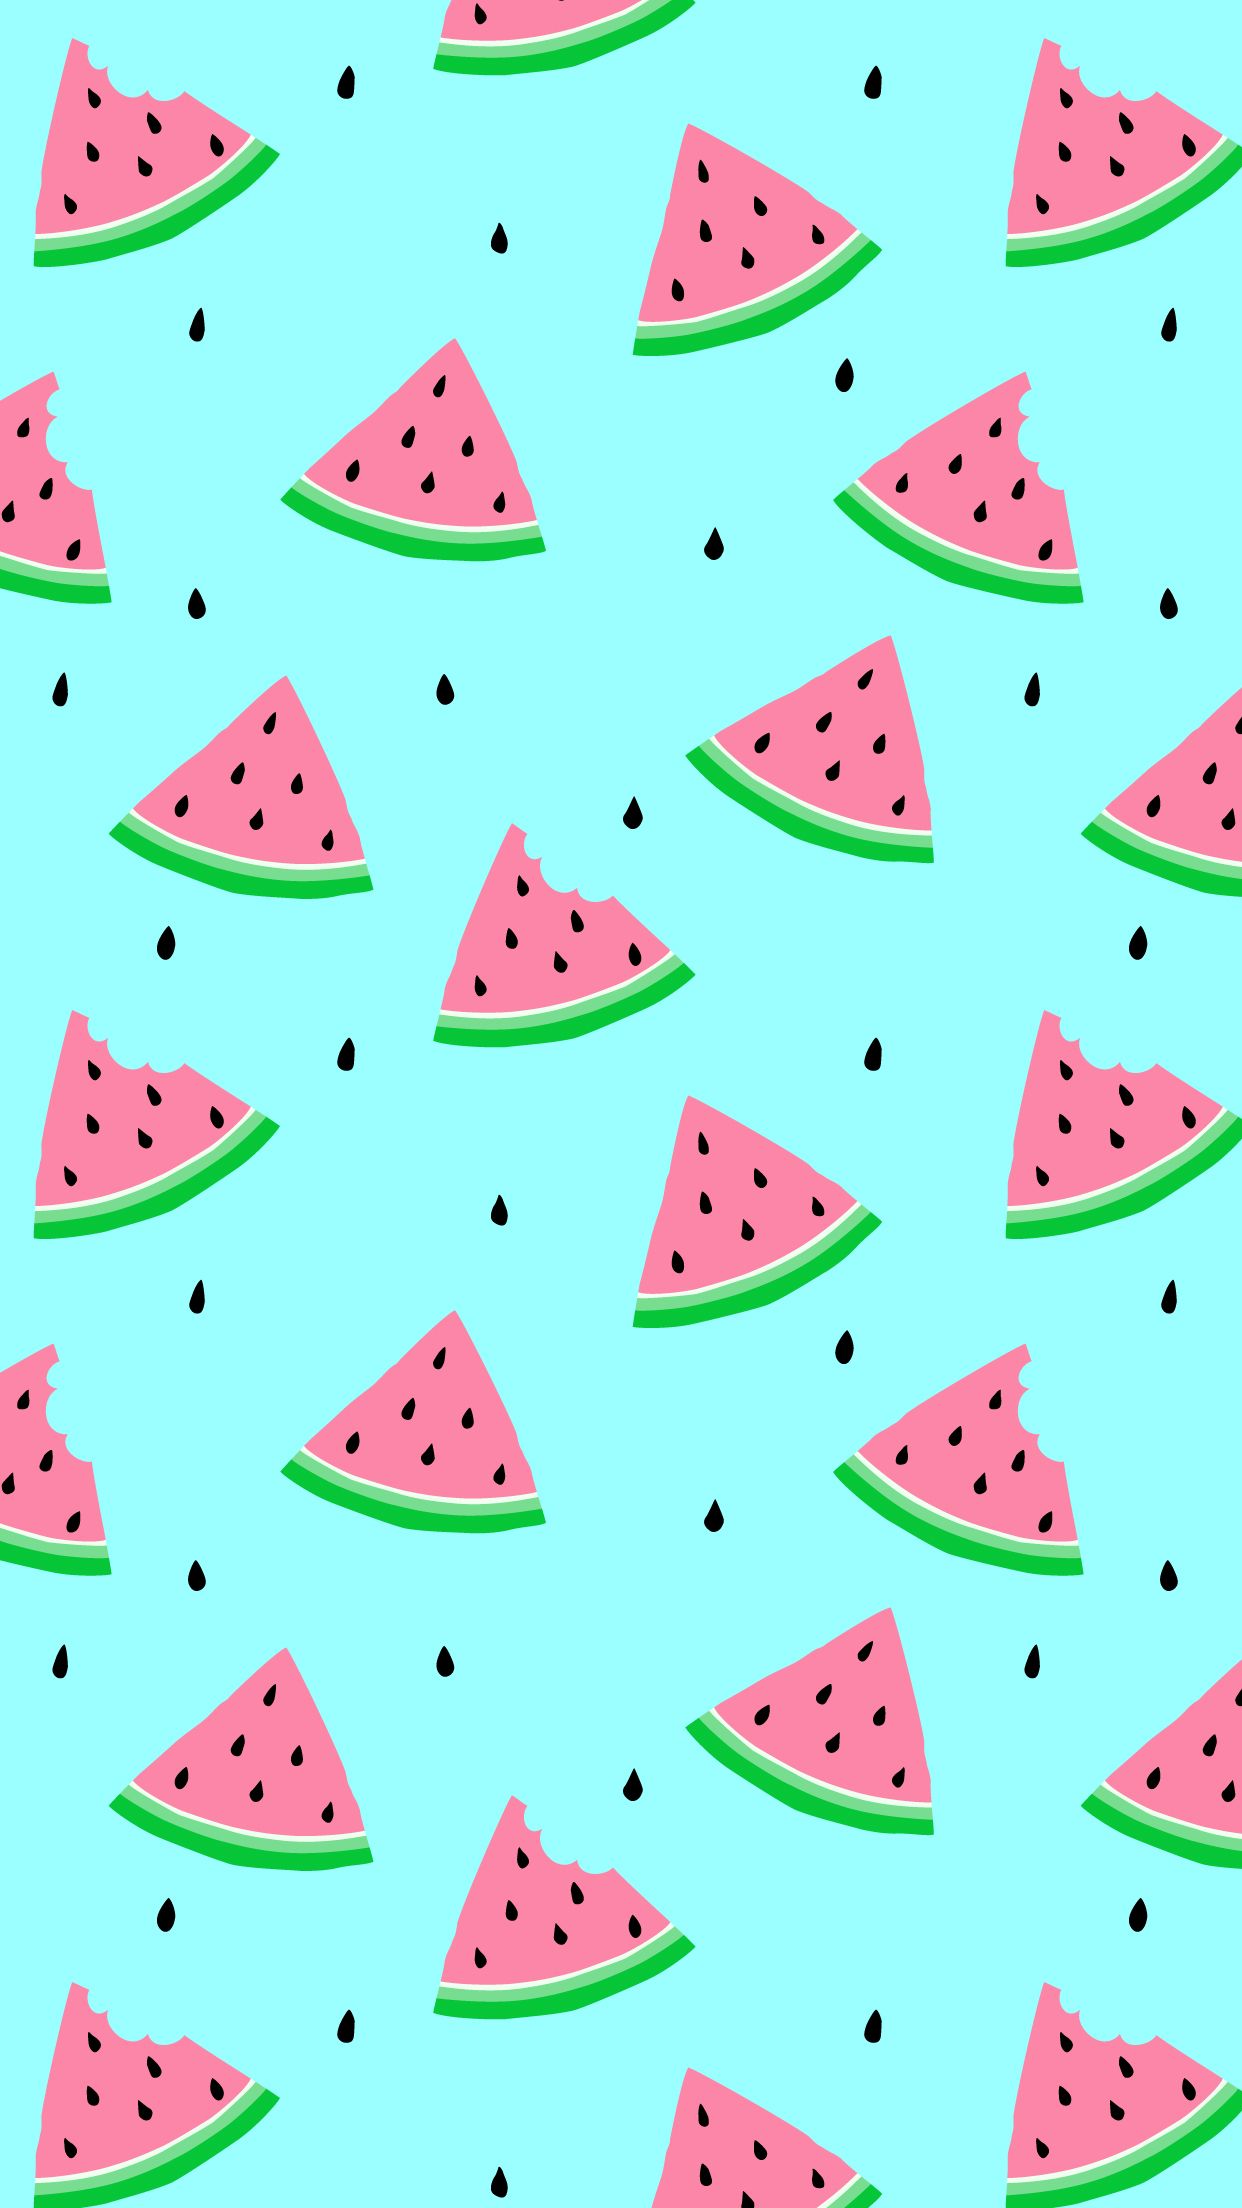 watermelon wallpaper hd,watermelon,pink,melon,pattern,citrullus